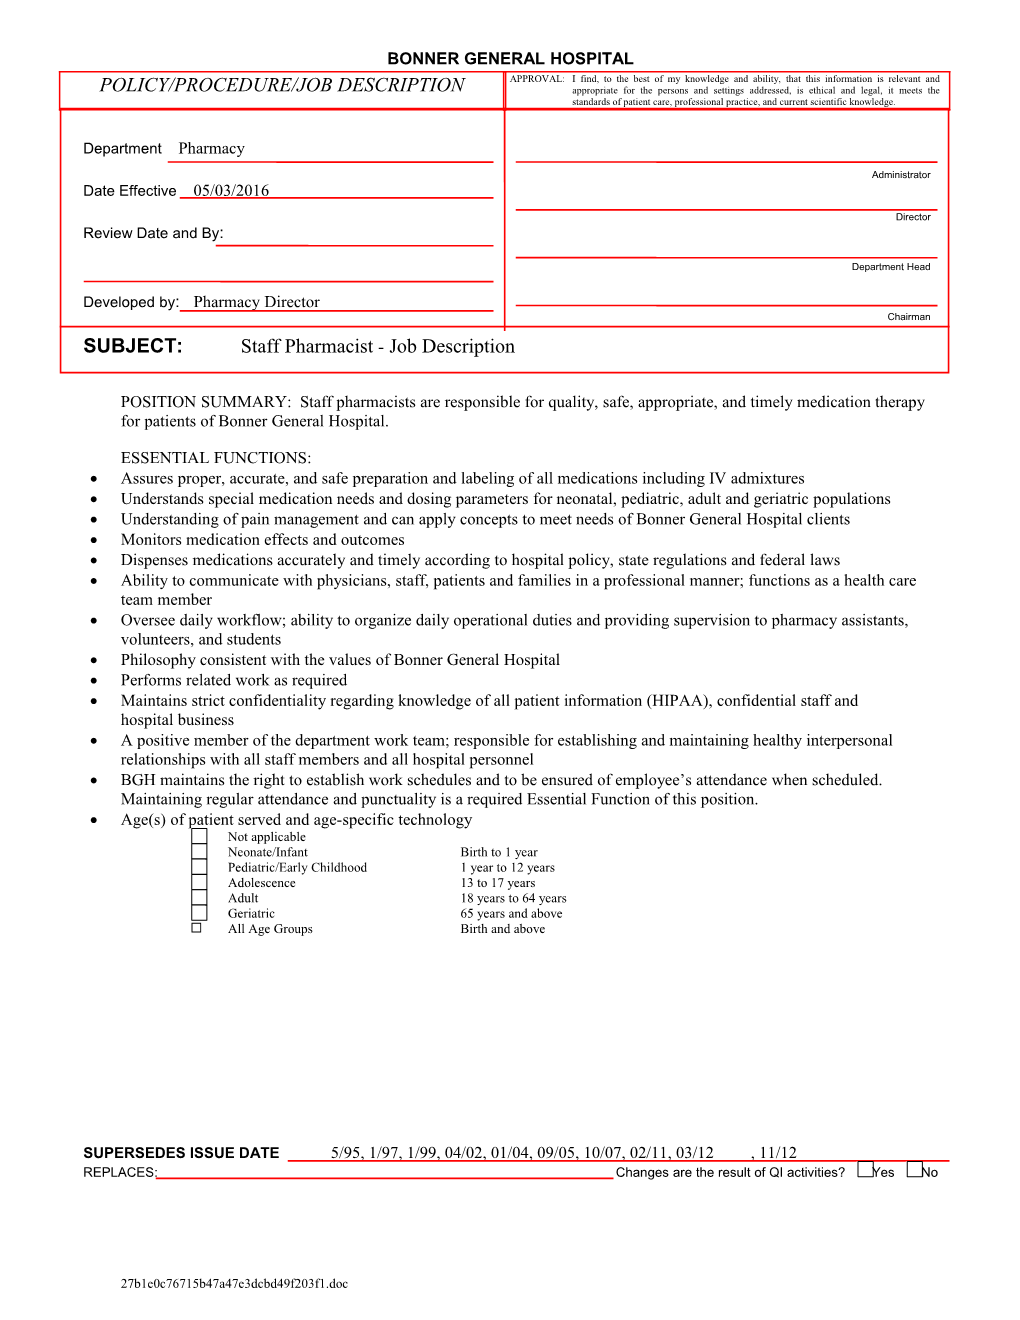 Subject:Staff Pharmacist - Job Description